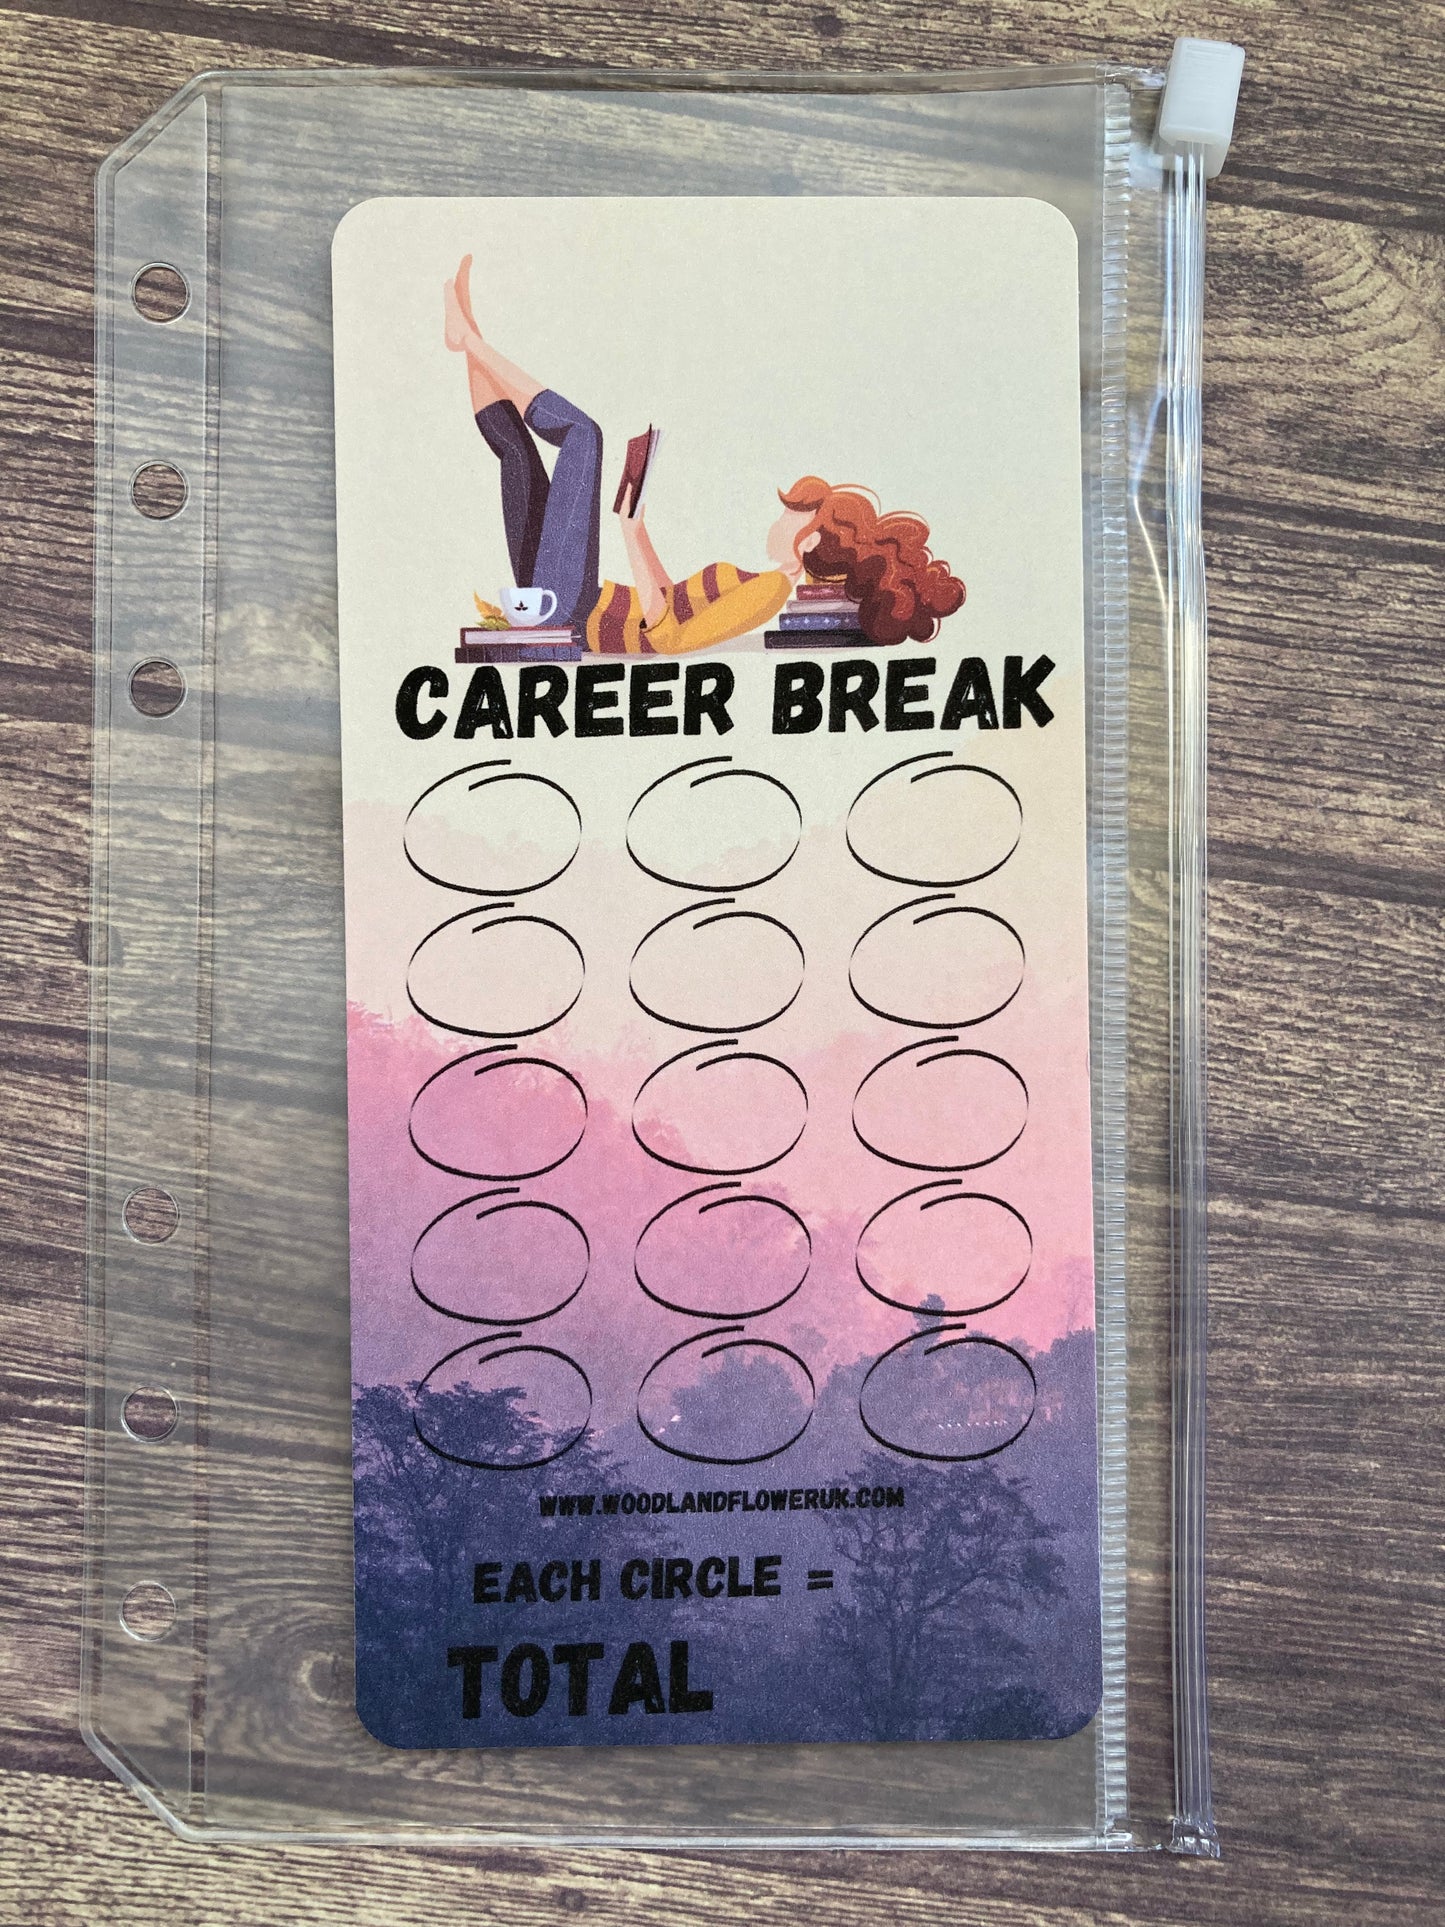 Saving challenge “career break”